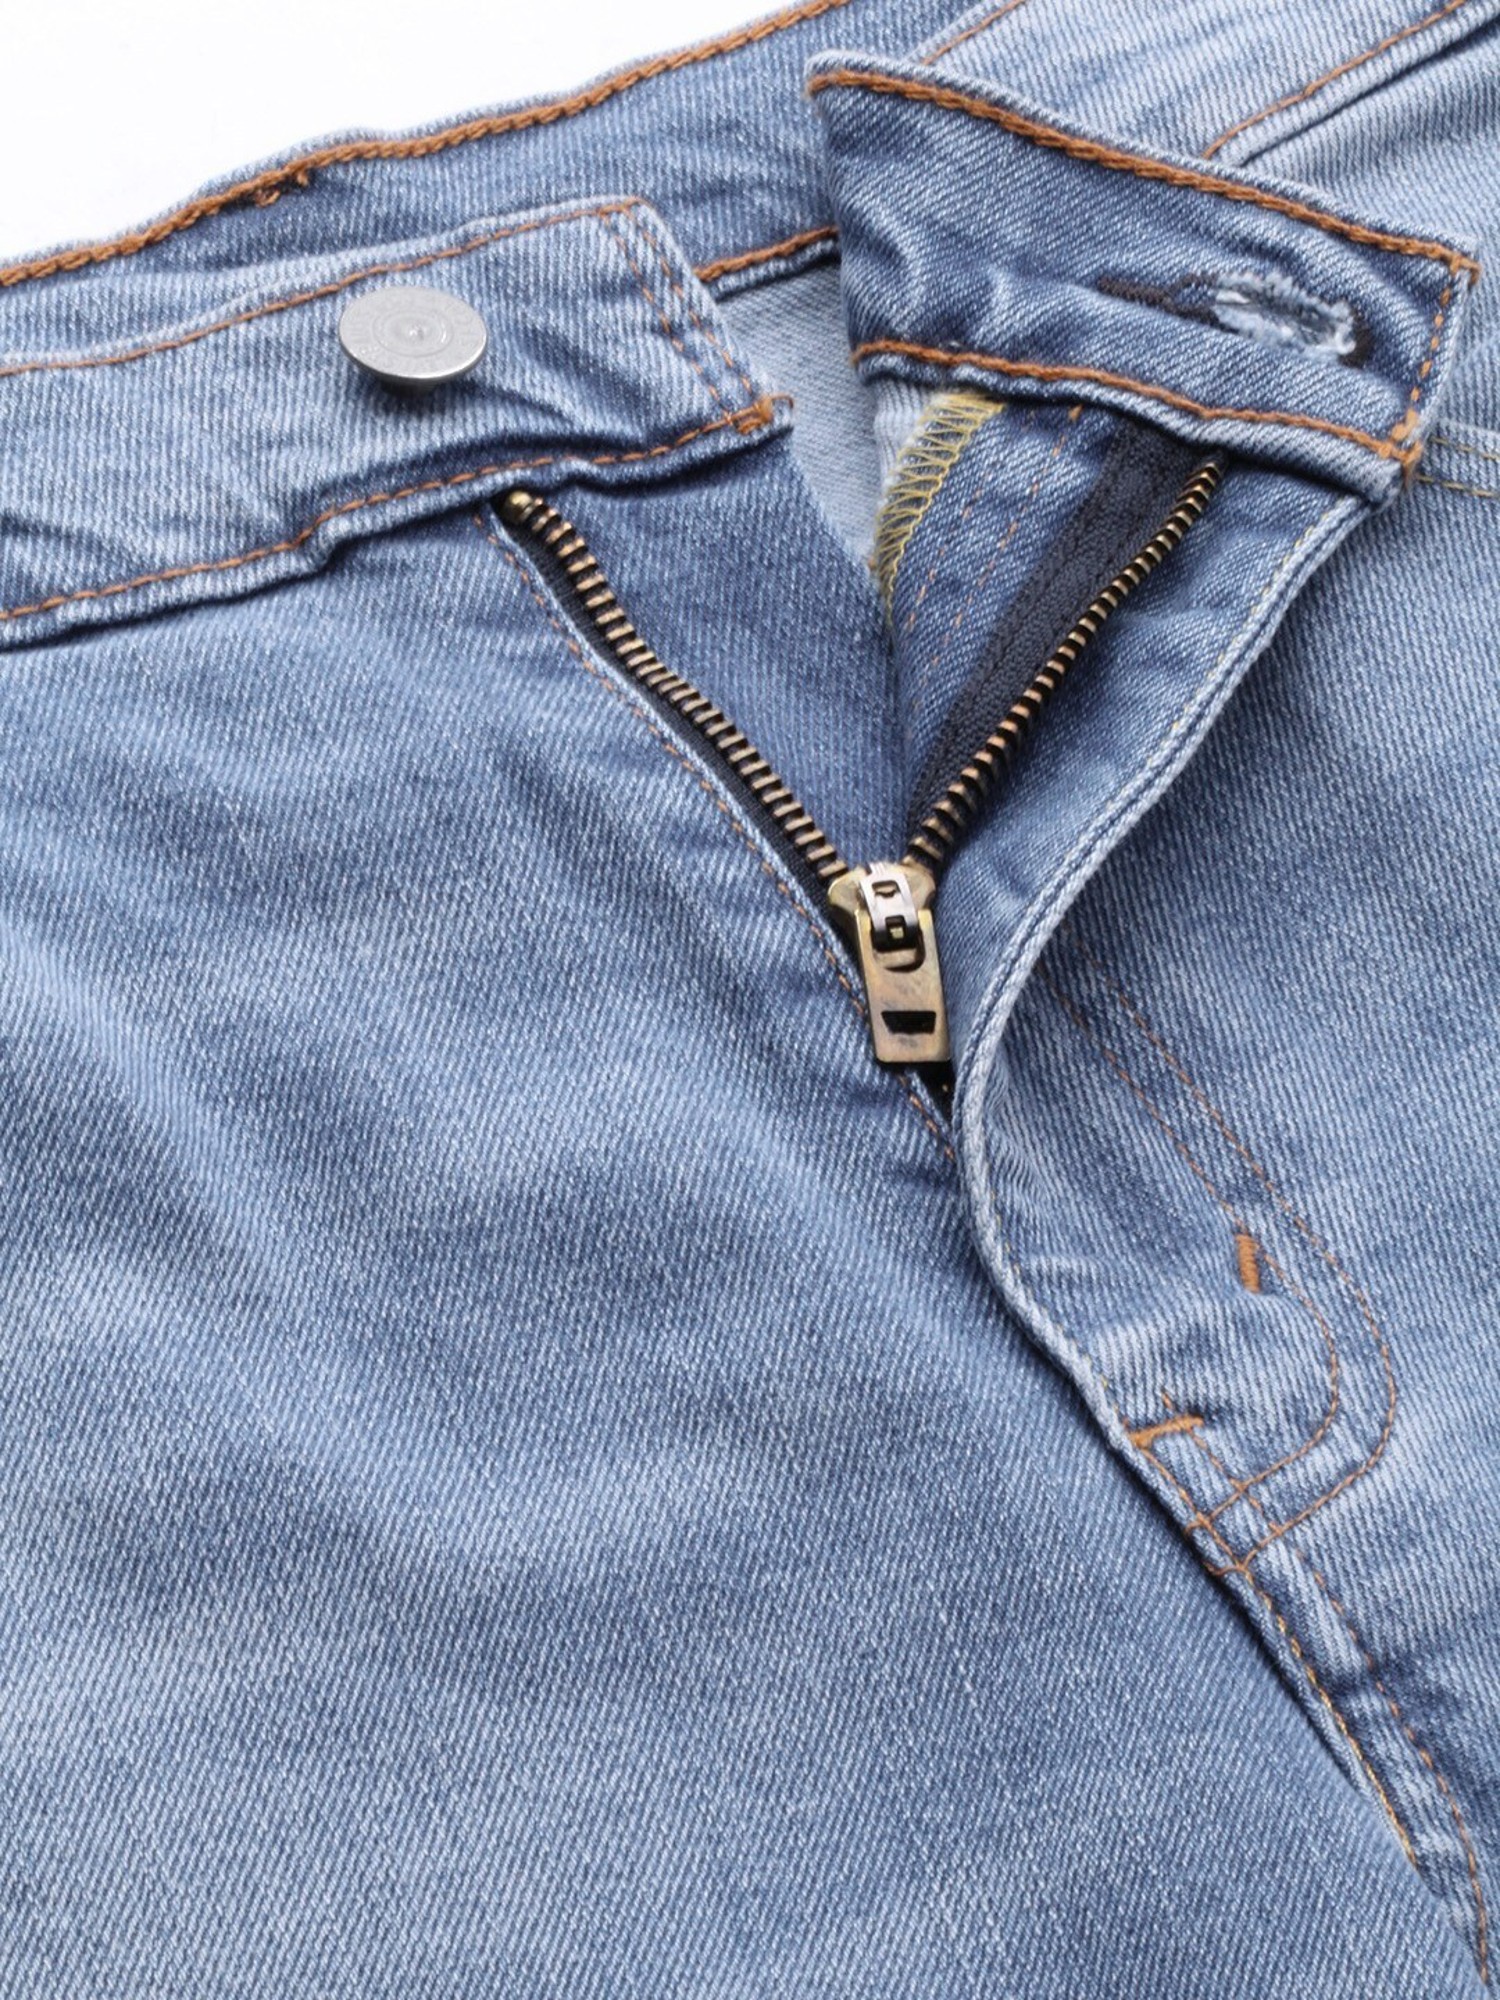 Buy Levis Light Blue Cotton Bootcut Jeans for Mens Online @ Tata CLiQ